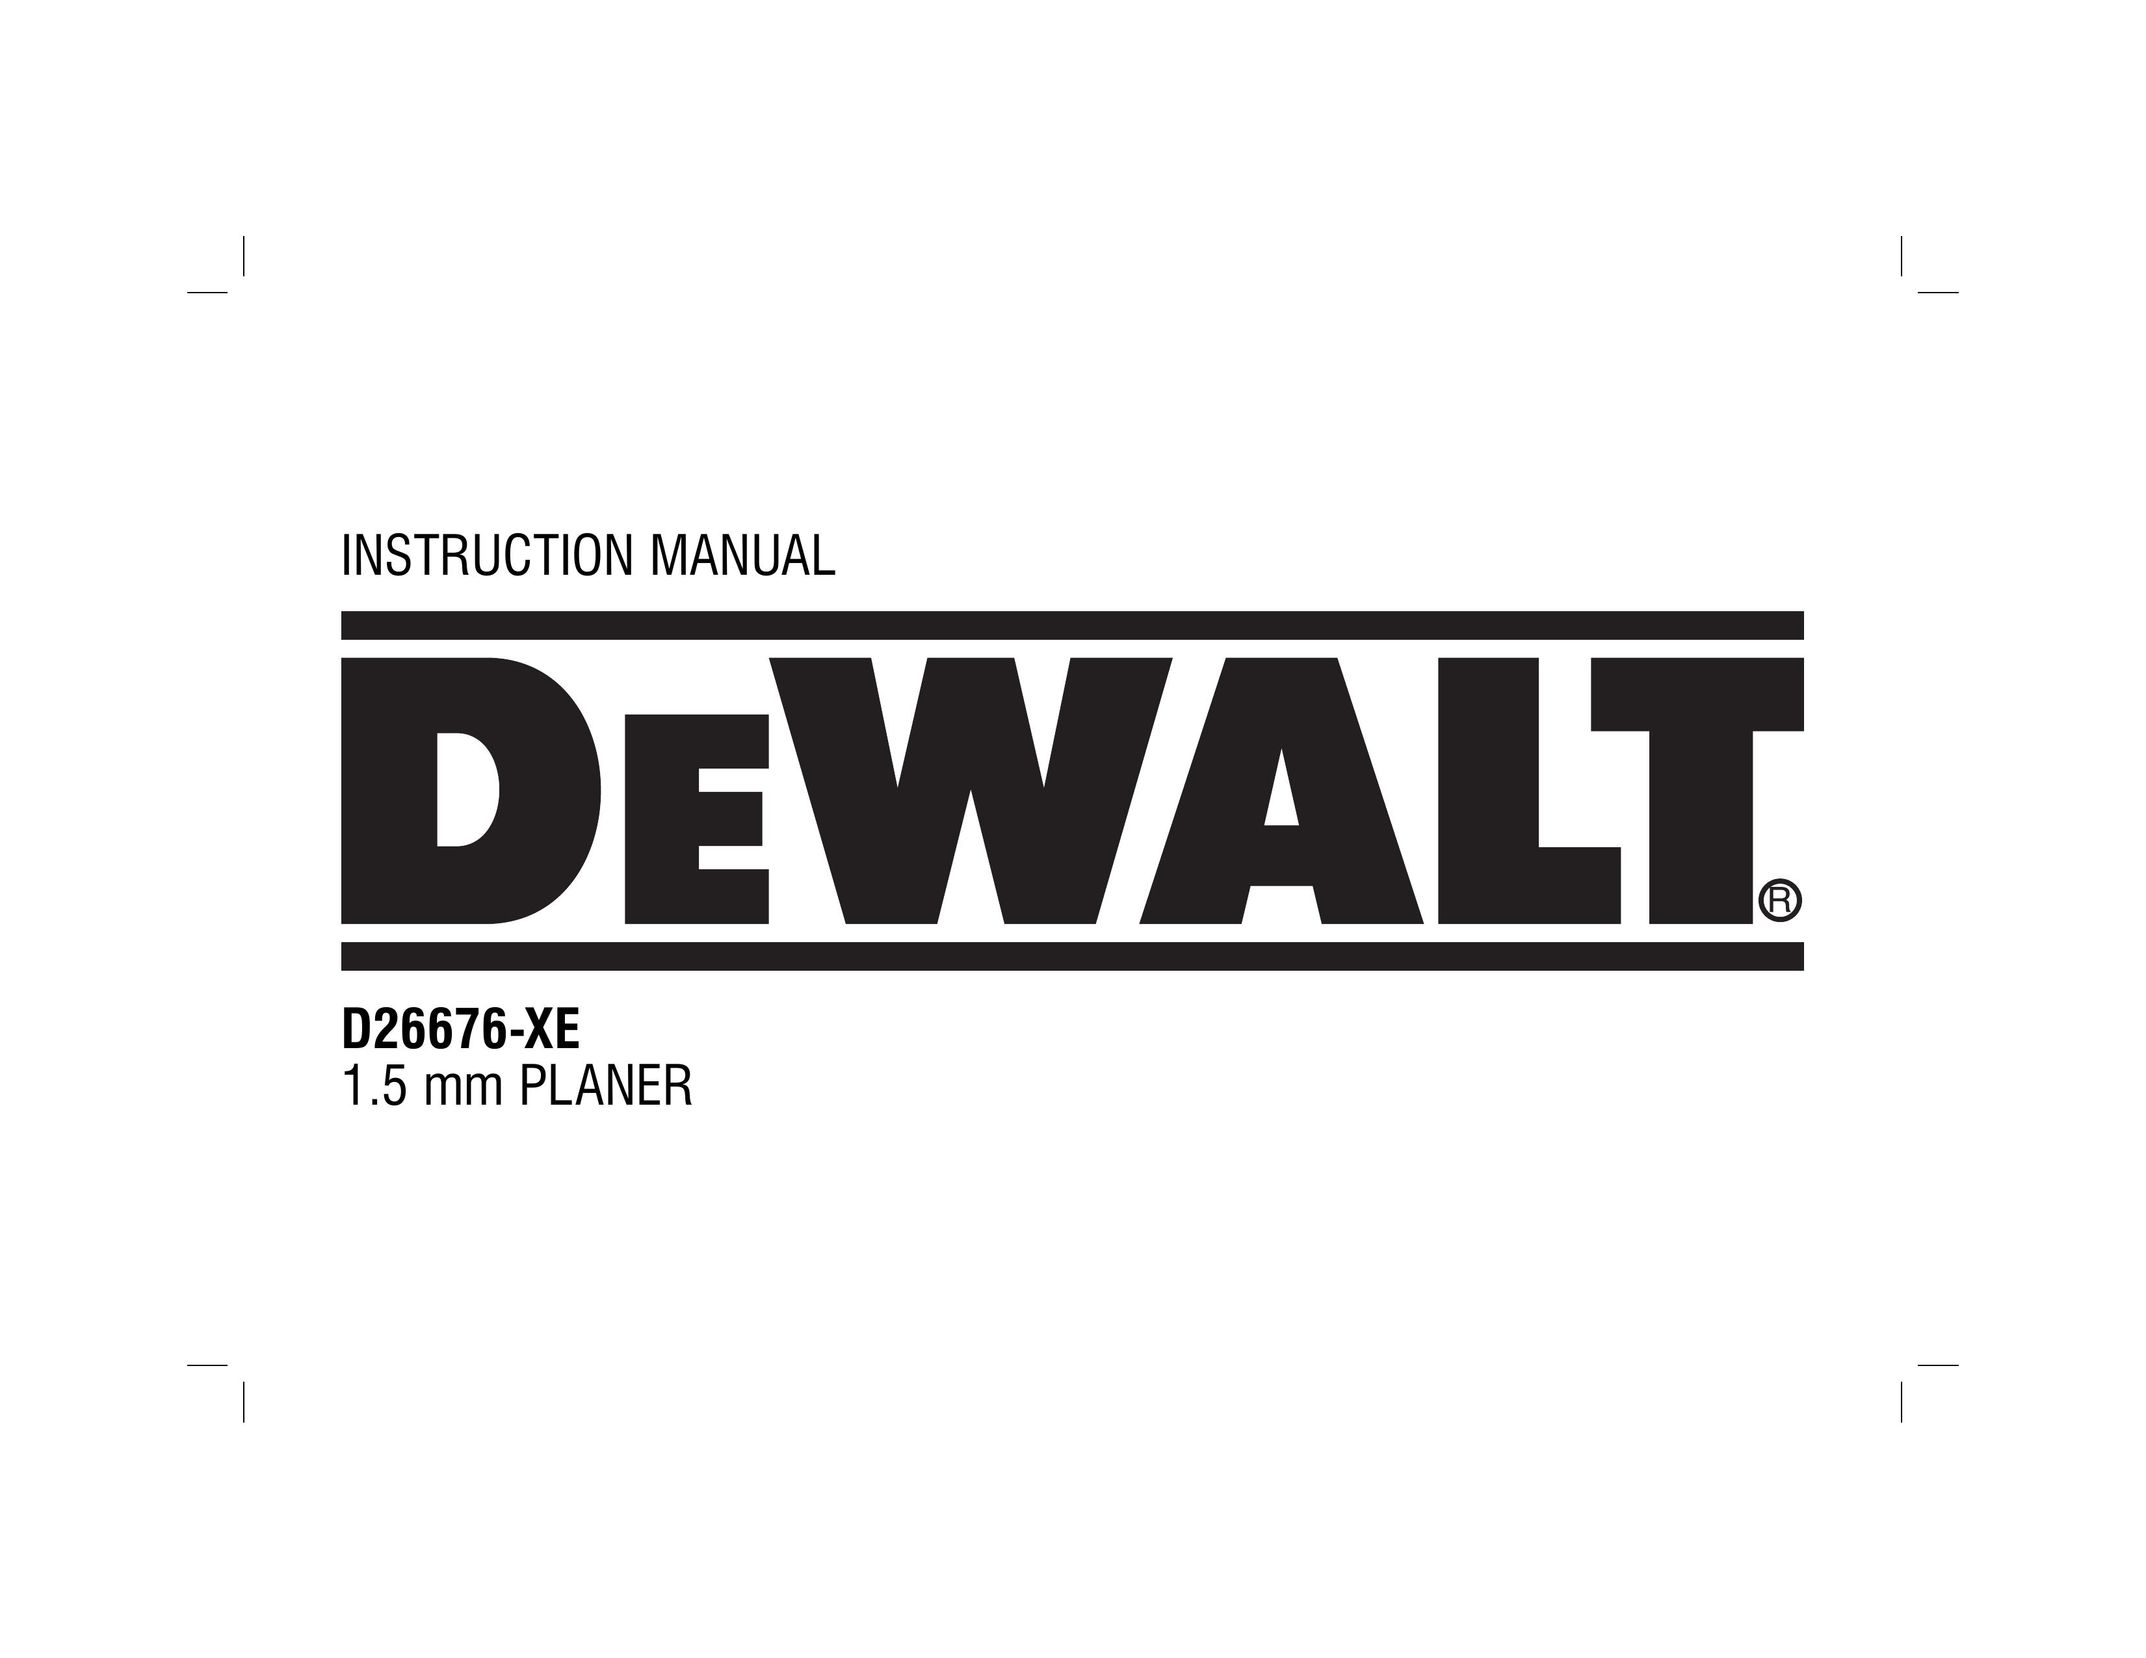 DeWalt D26676-XE Planer User Manual